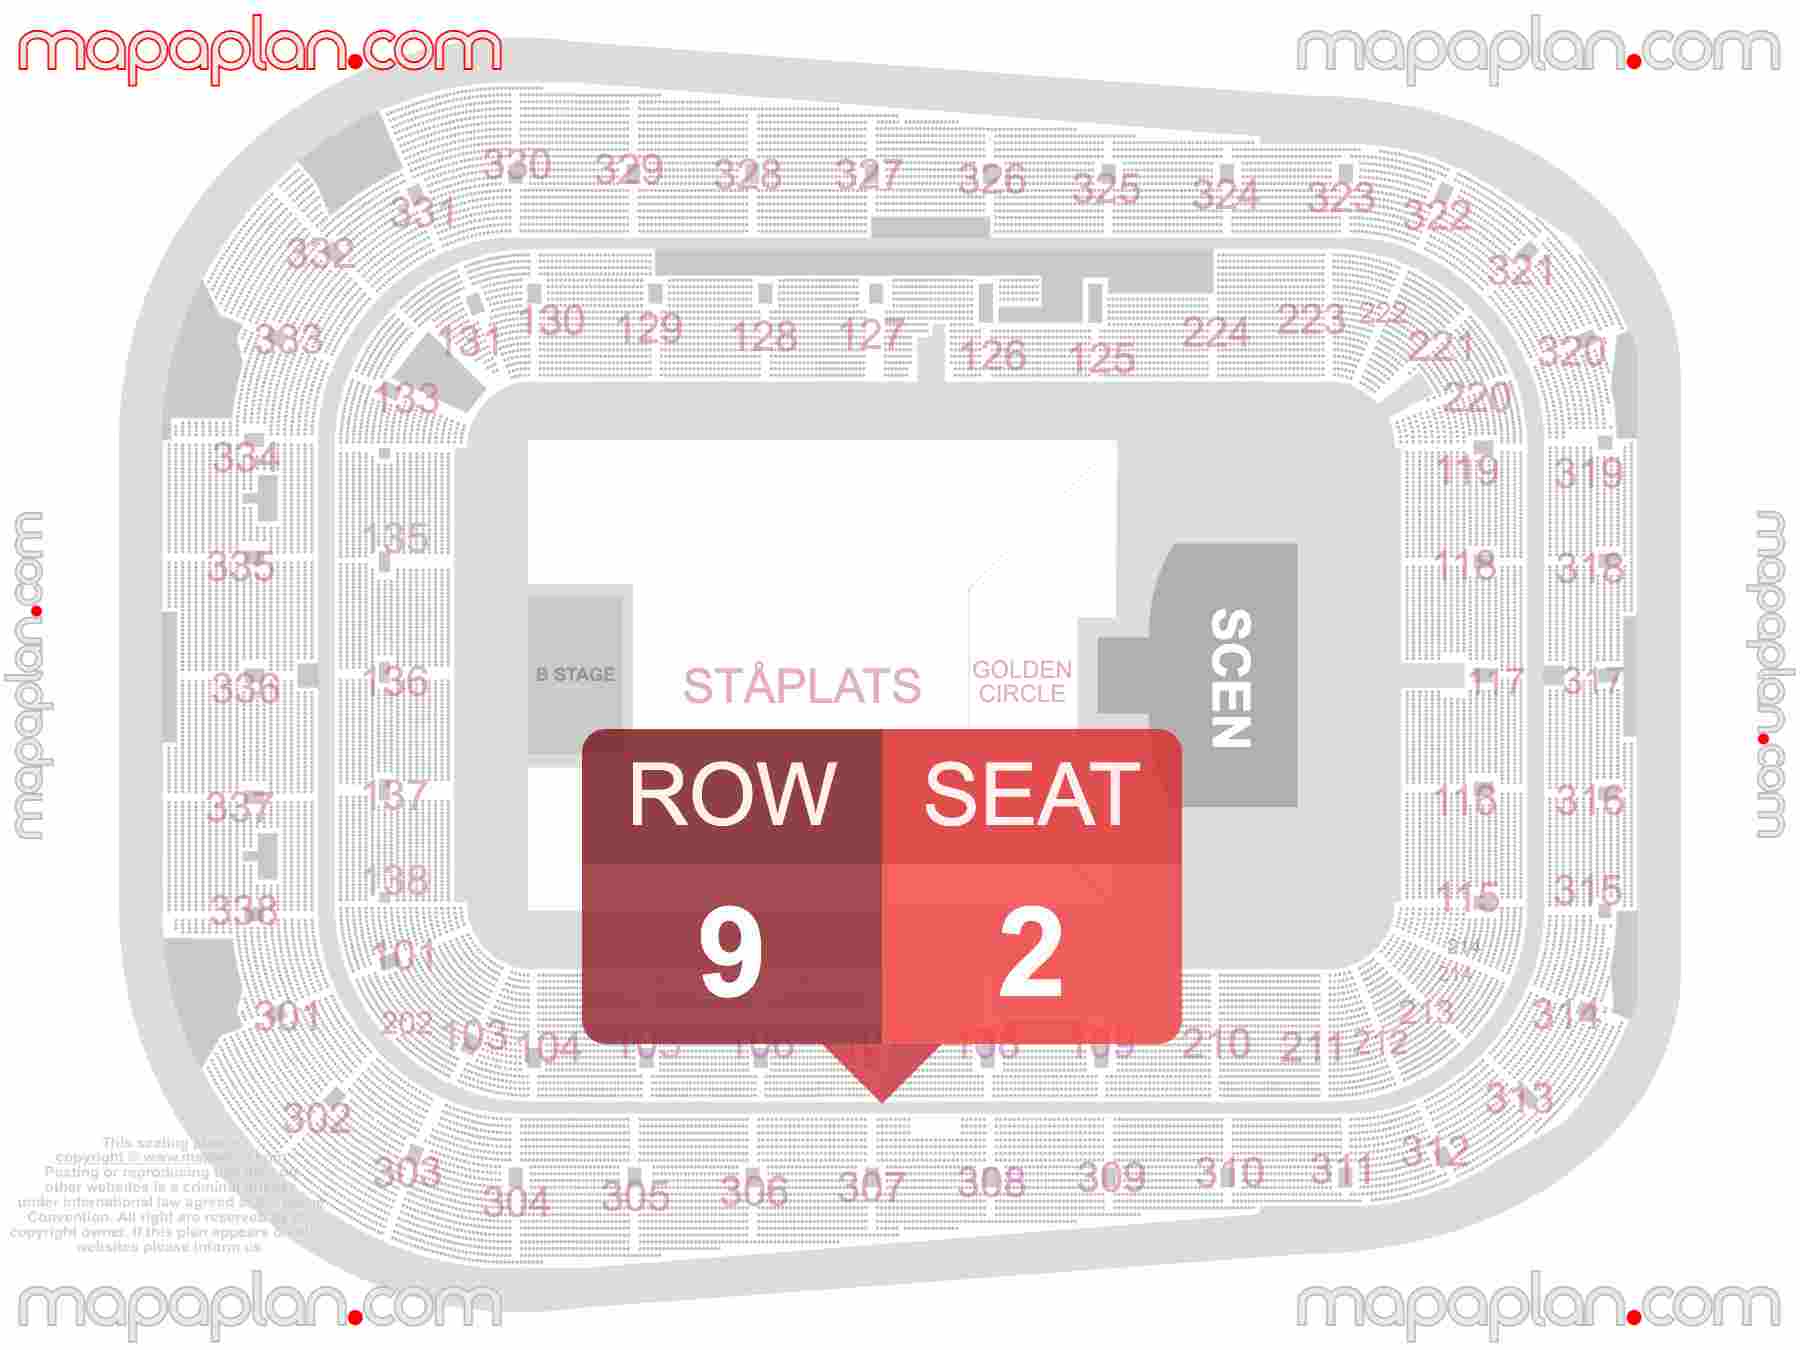 Stockholm Stockholmsarenan Tele2 Arena seating plan Concert sittplan med sektioner sittplatser platsnummer karta detailed seat numbers and row numbering plan with interactive map map layout